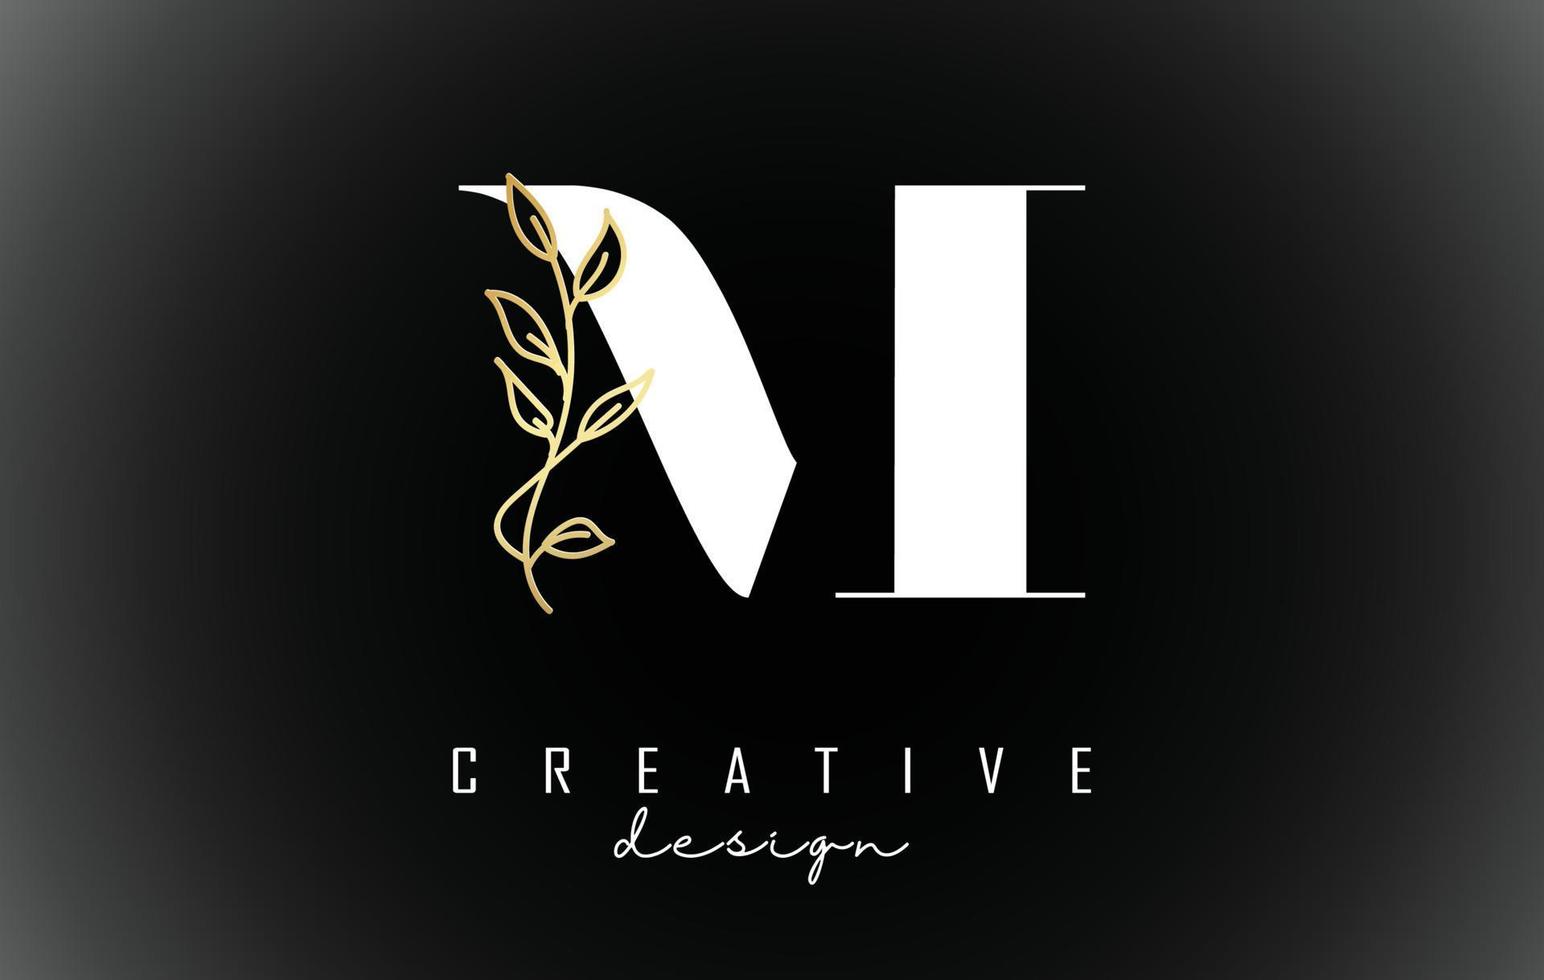 White M letter logo design with golden leaves branch vector illustration.